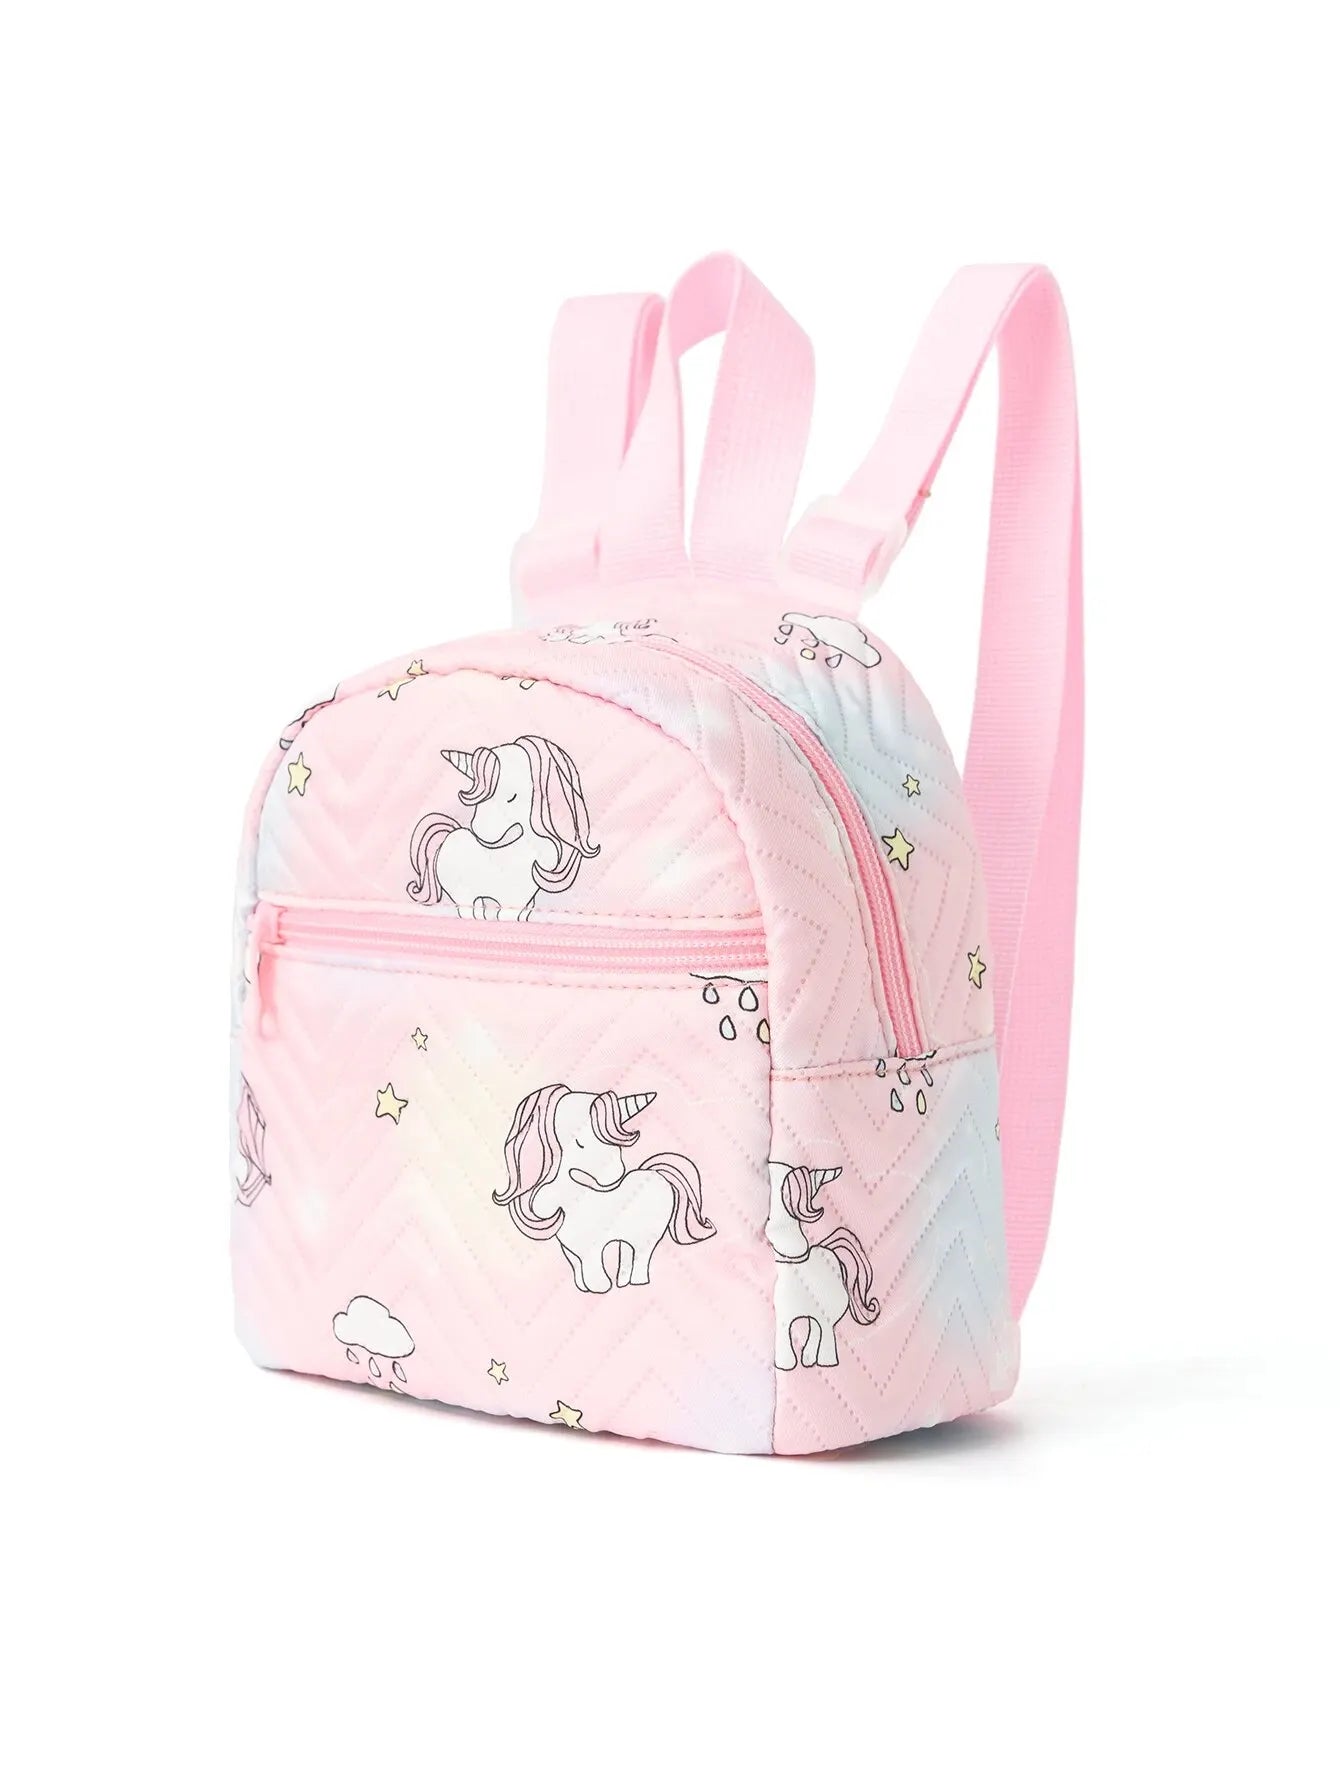 1 Pc Cute Cartoon Unicorn Diamond Print Kids Backpack Handbag For Girls, Students, Outdoor Travel, School, Holiday Gifts